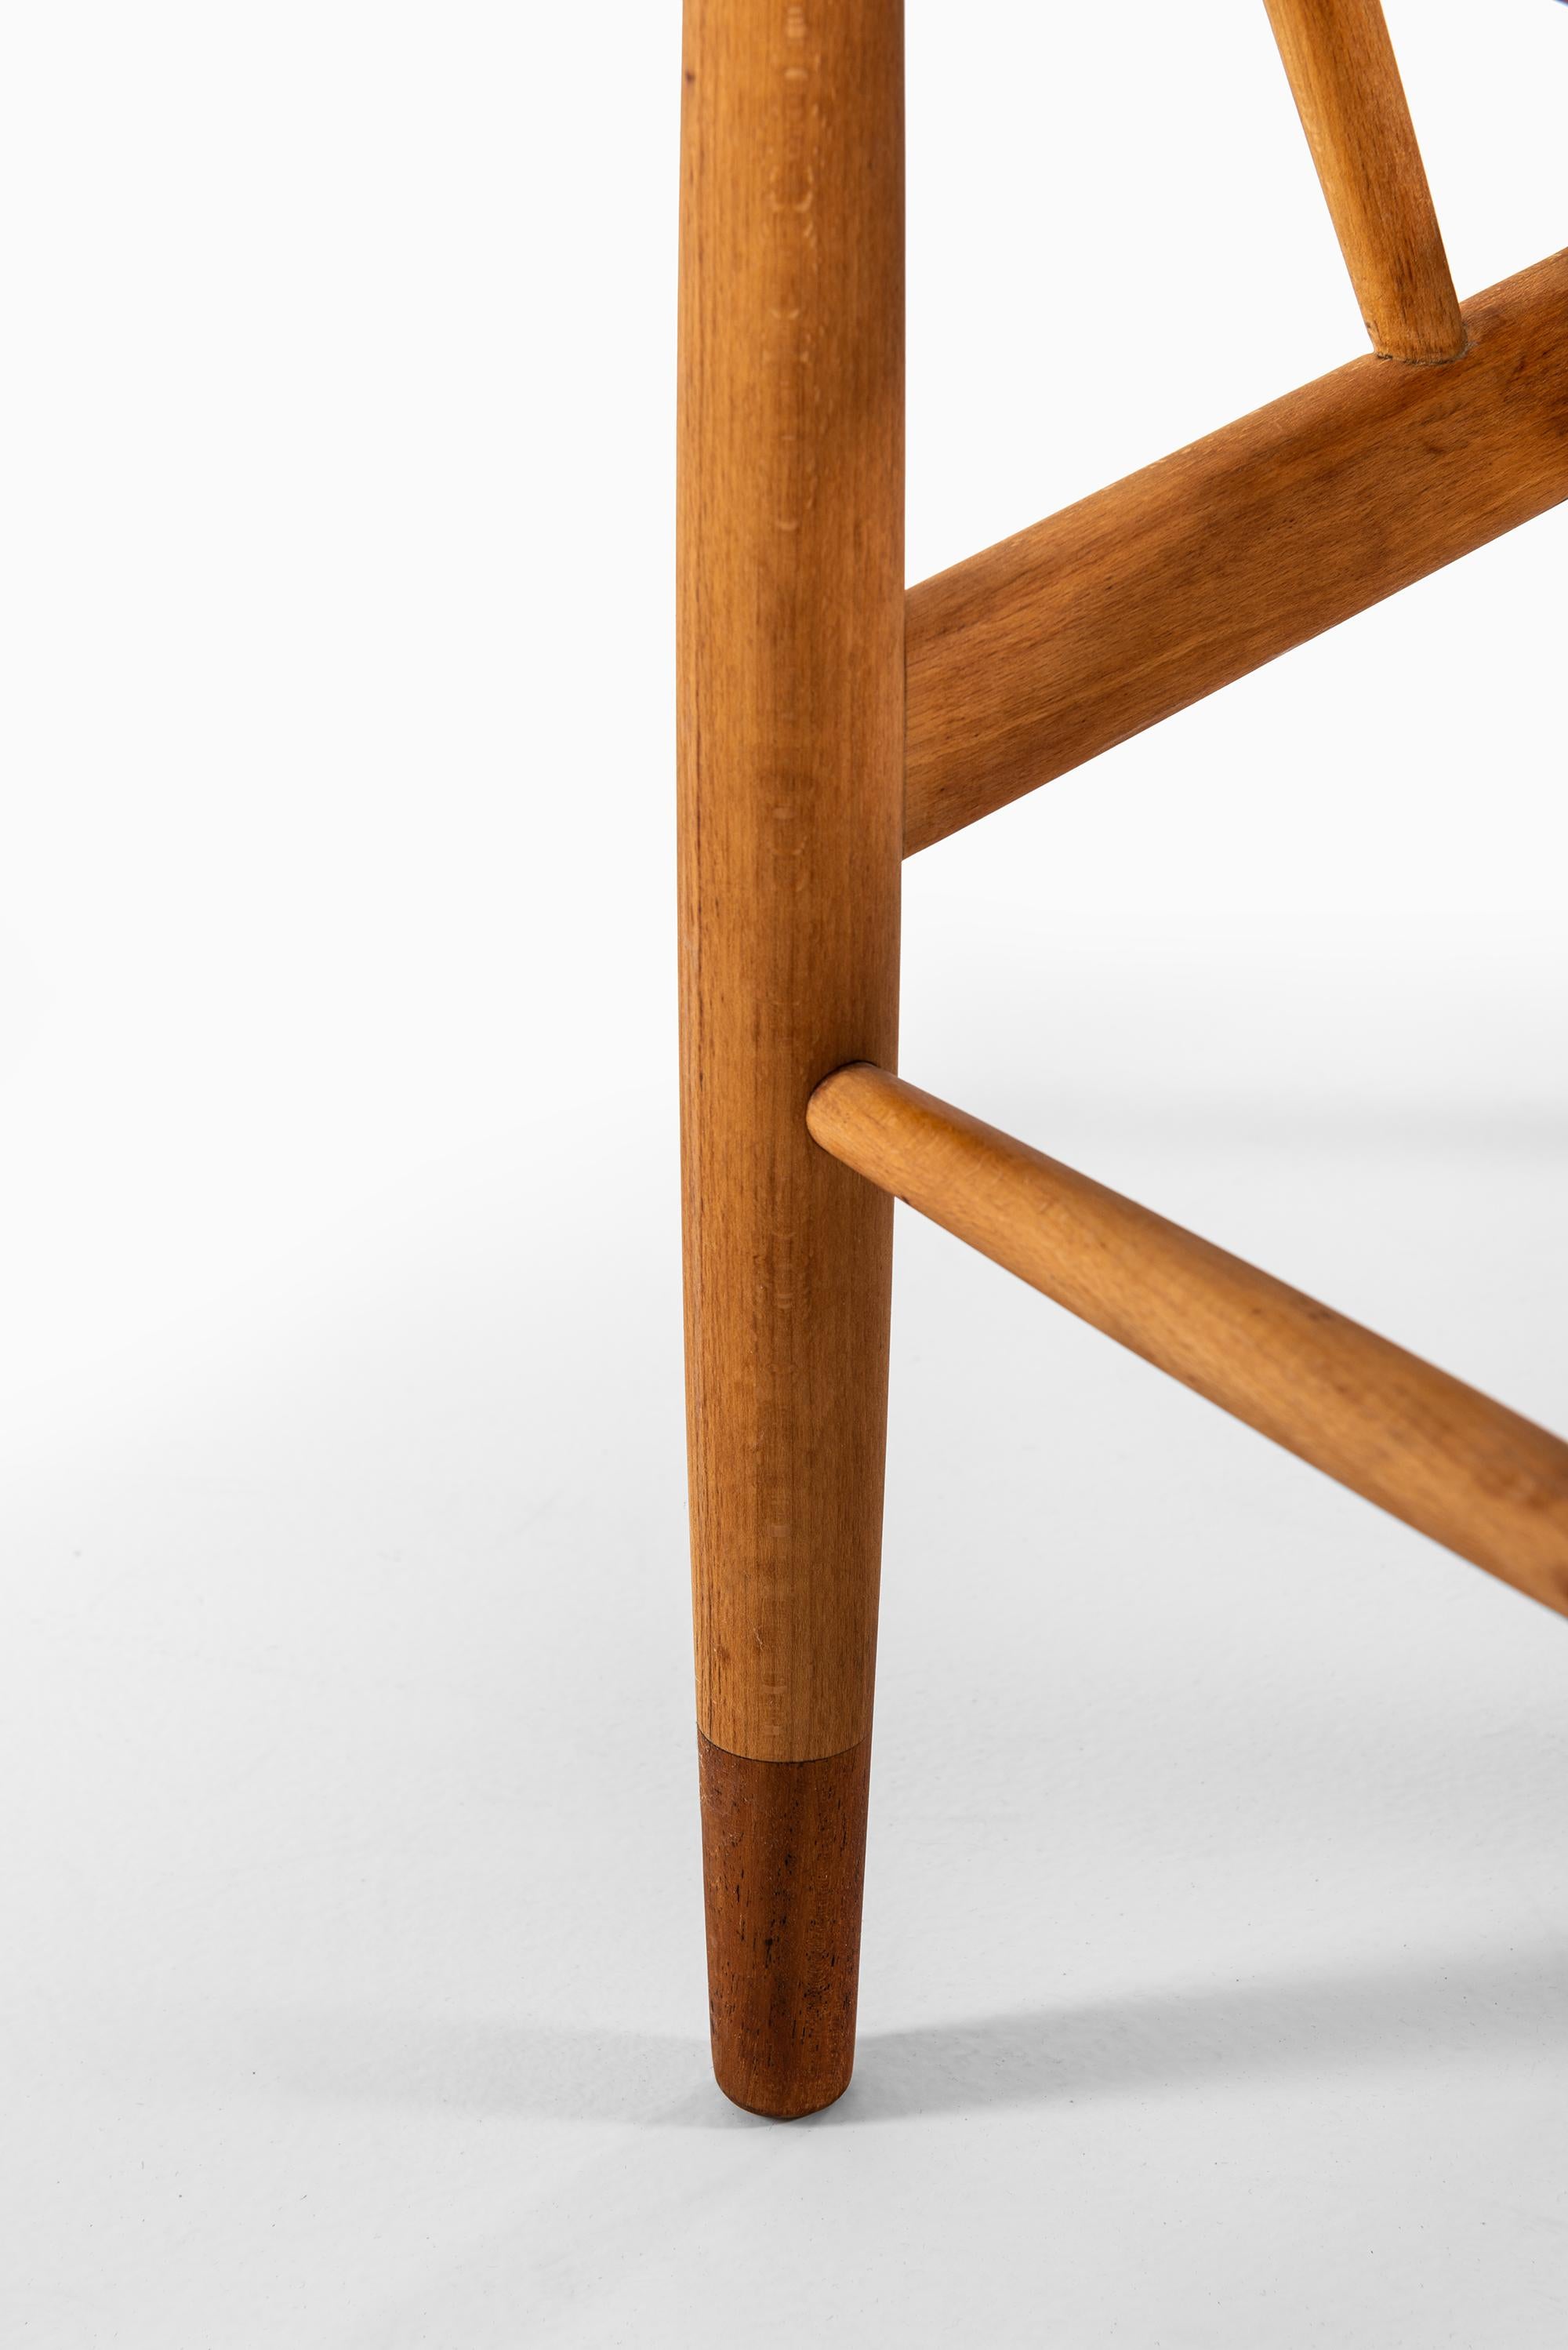 Fabric Ib Kofod-Larsen Shell Easy Chair Produced by Christensen & Larsen in Denmark